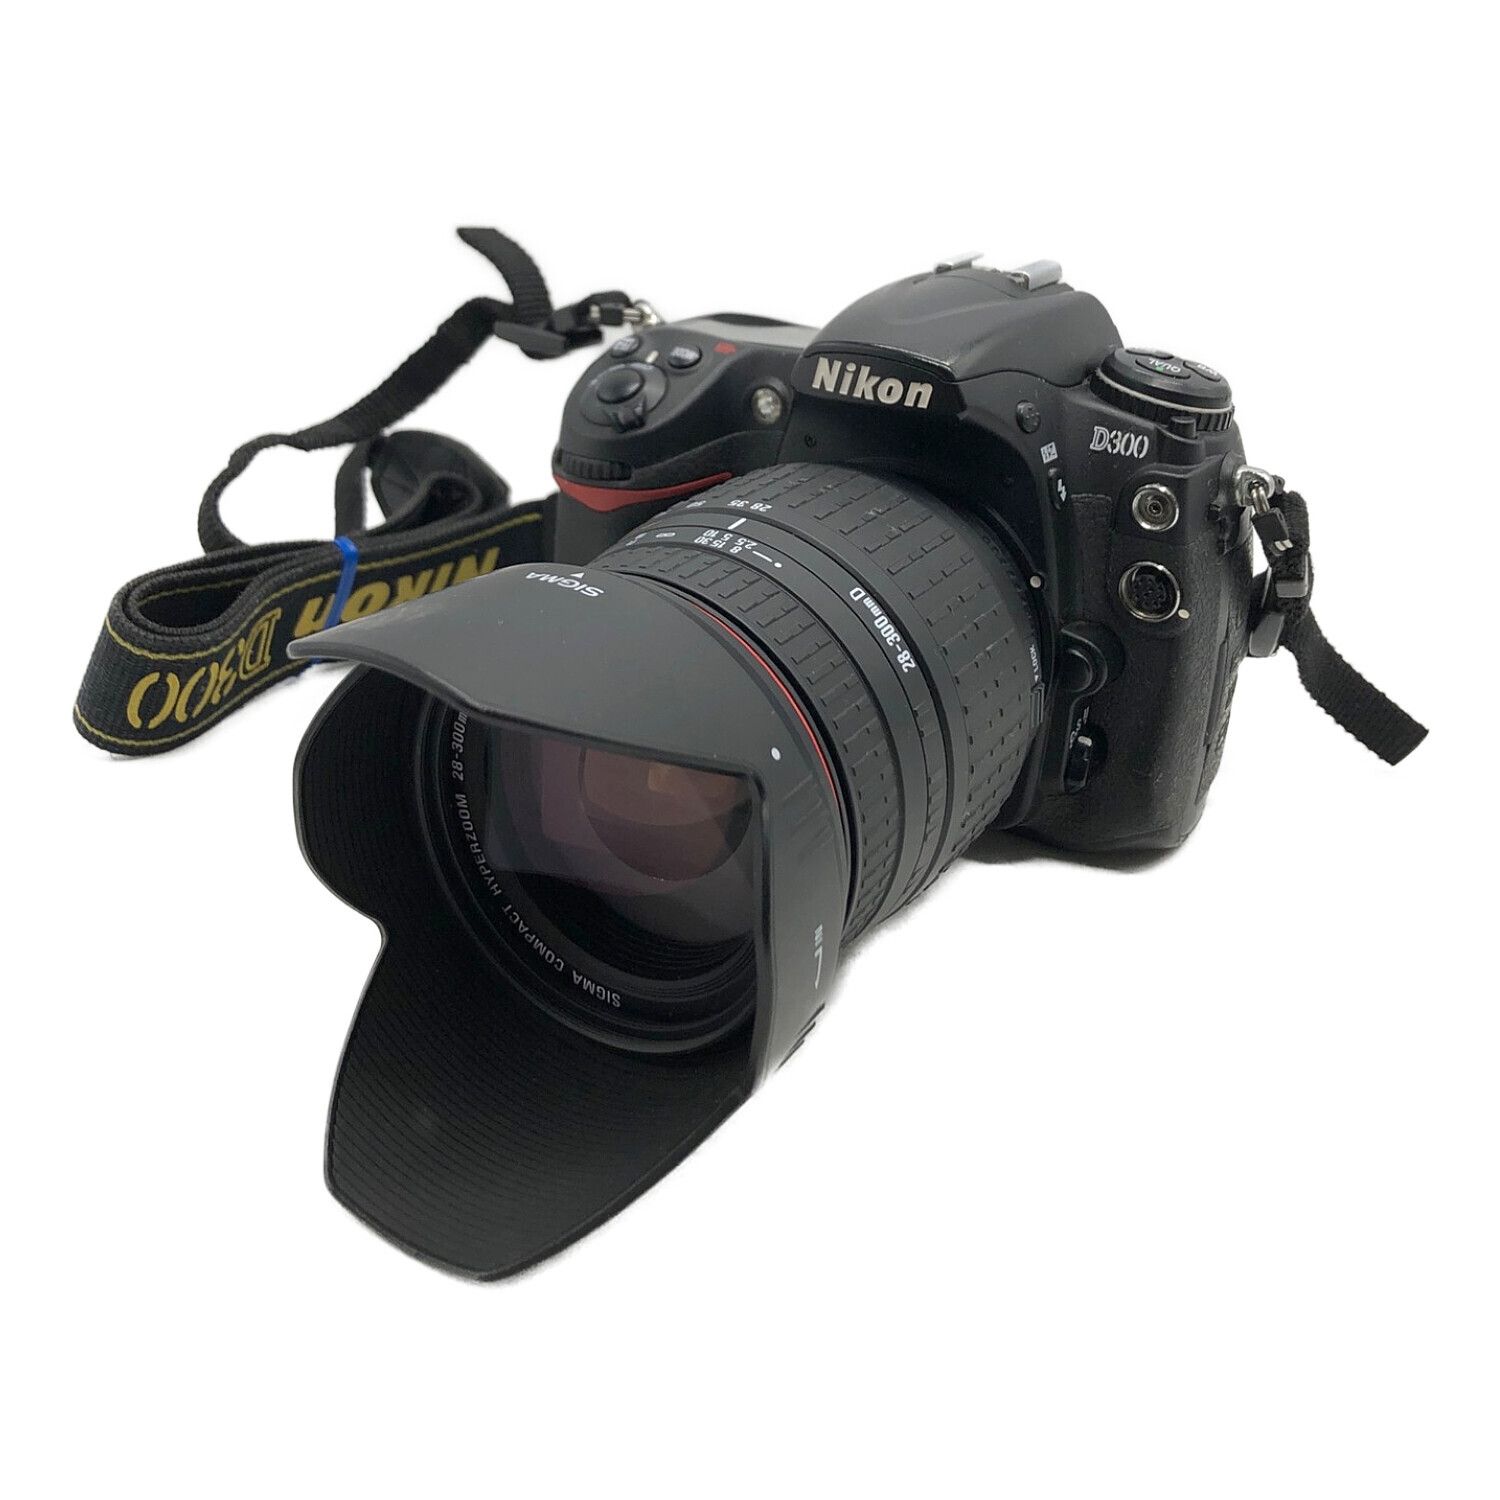 Nikon (ニコン) デジタル一眼レフカメラ レンズ:28-300mm F3.5-6.3